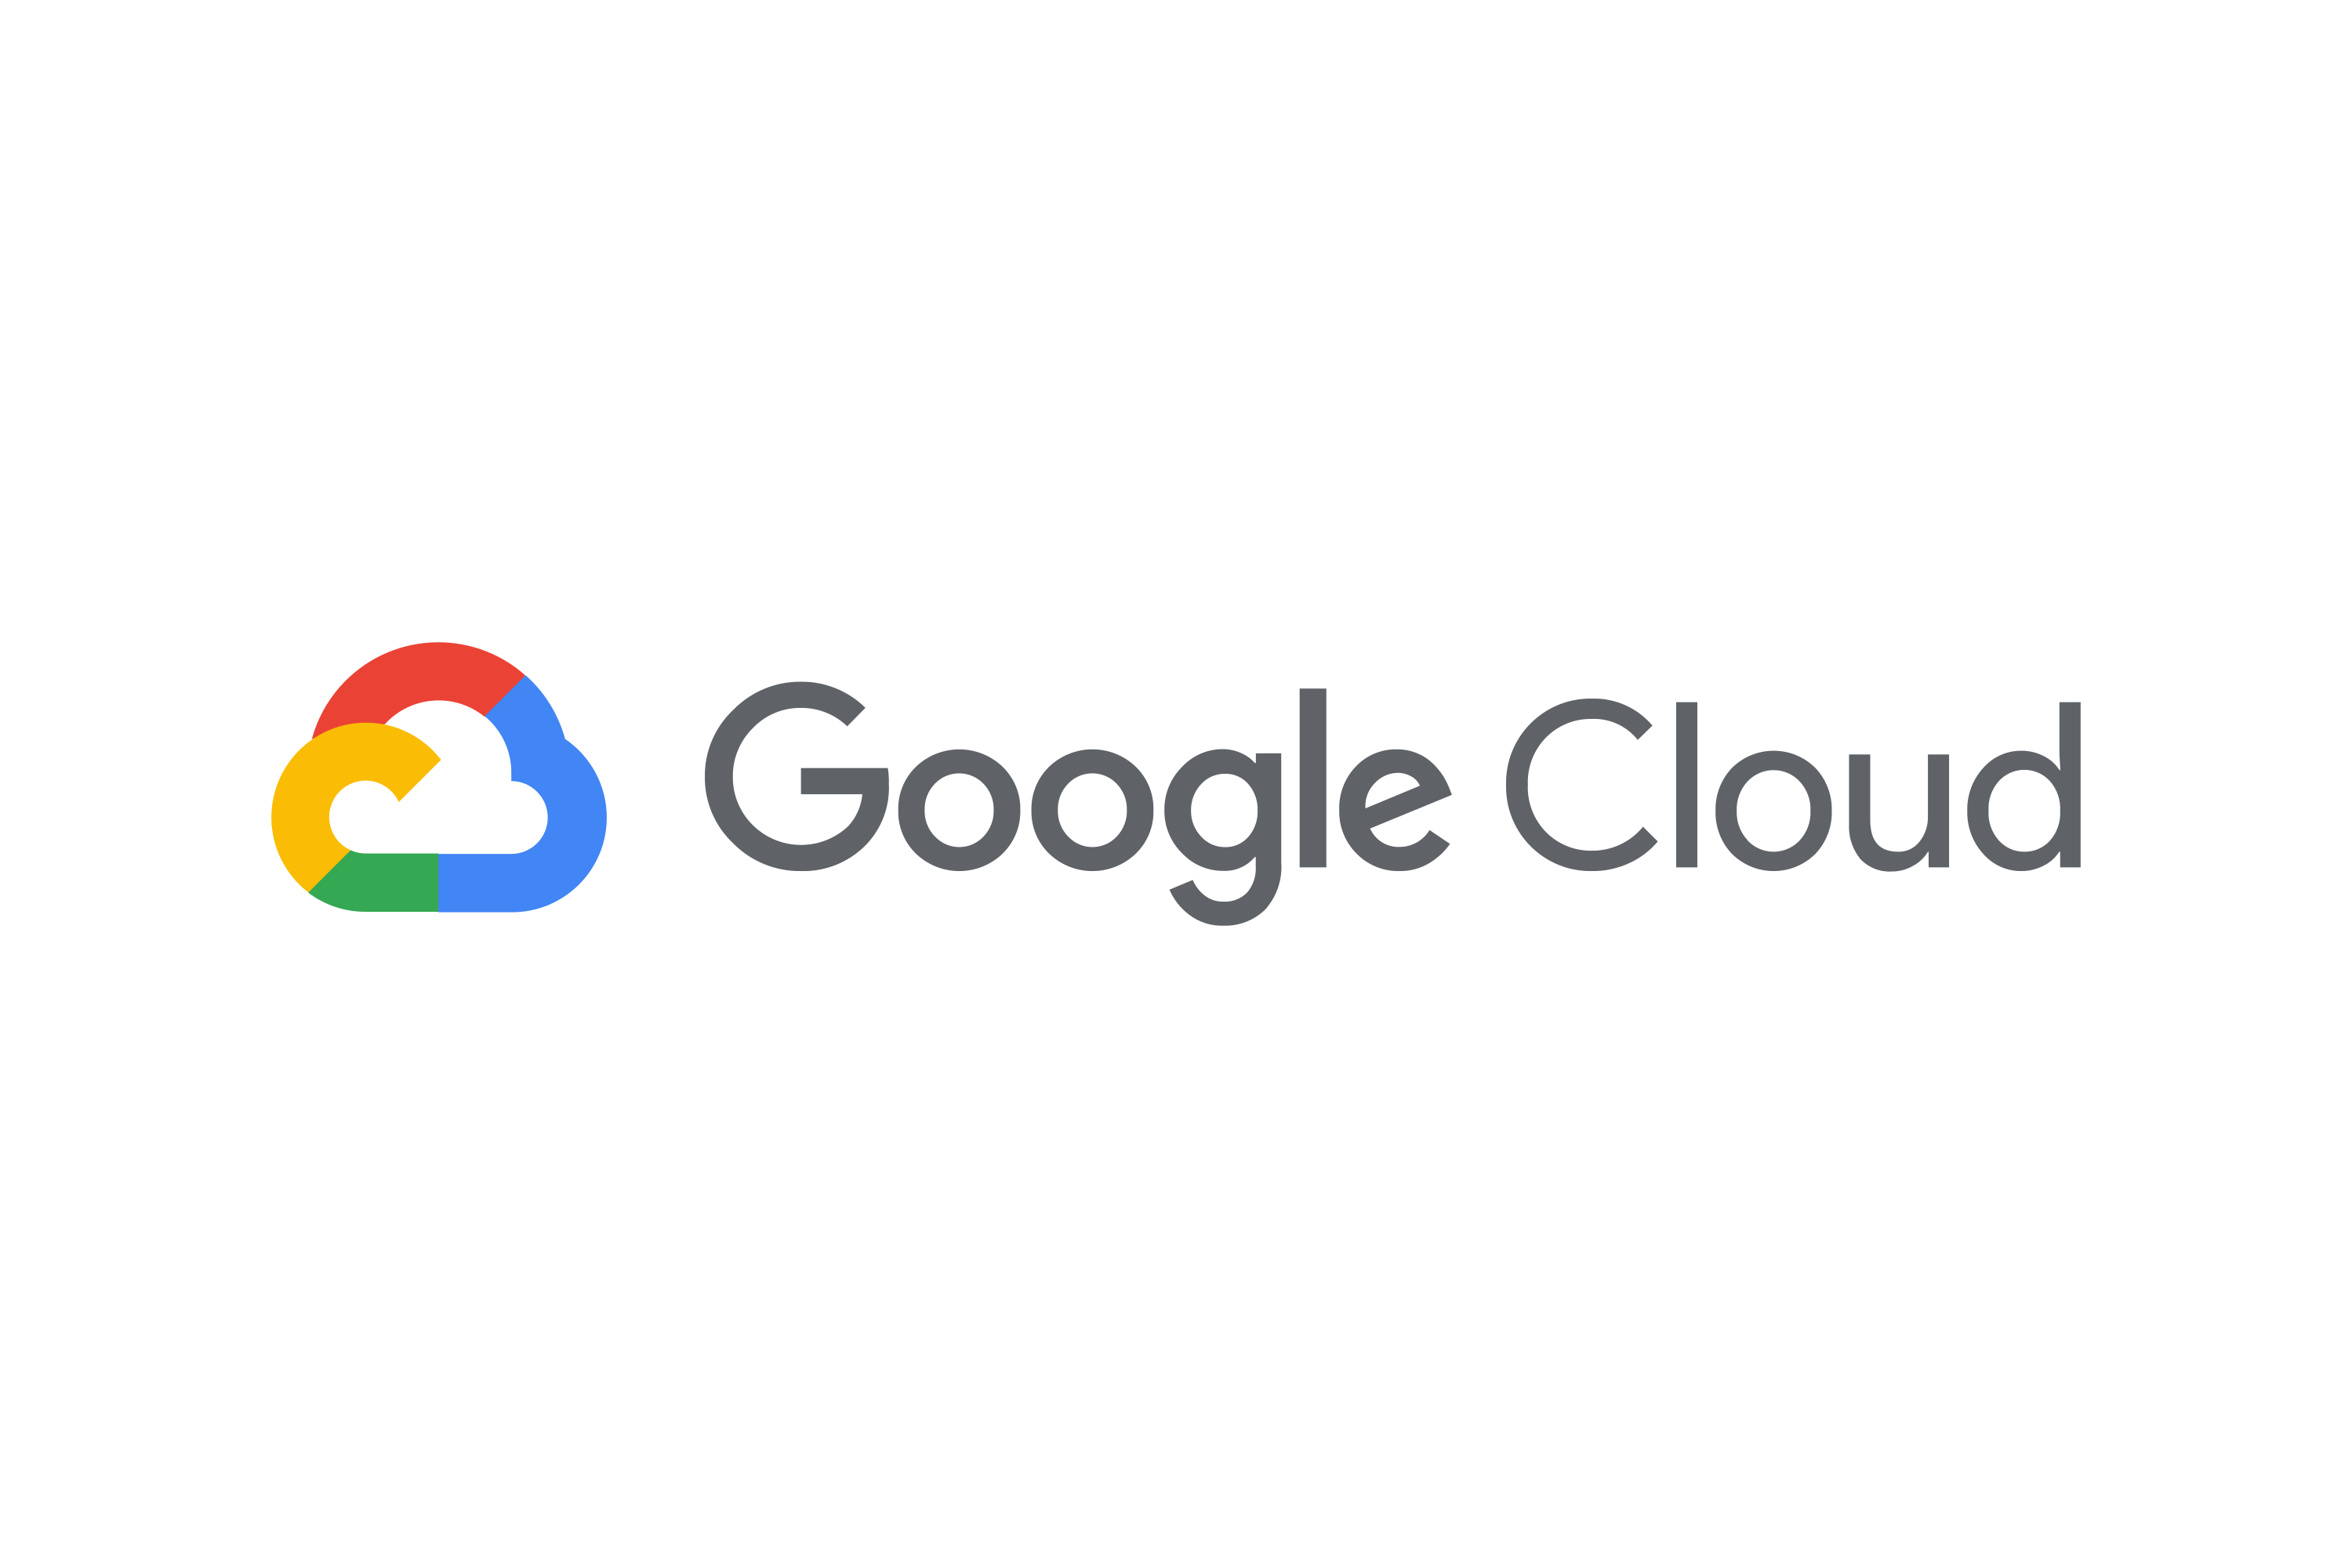 Google Cloud Logo PNG Free Download